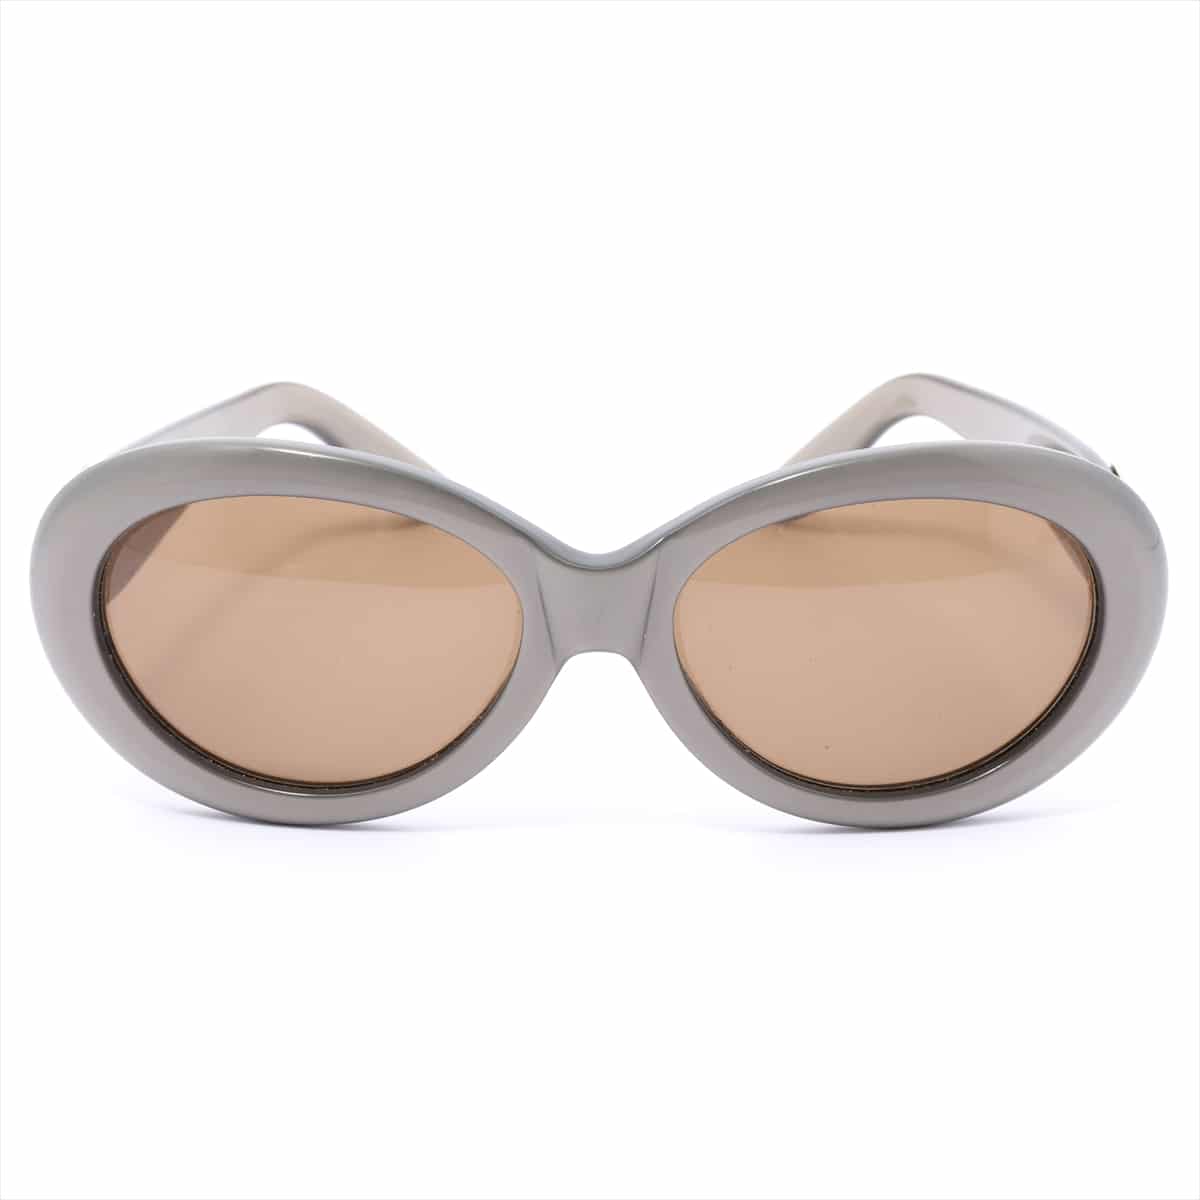 Fendi FS170 Sunglasses Plastic Brown There is distortion